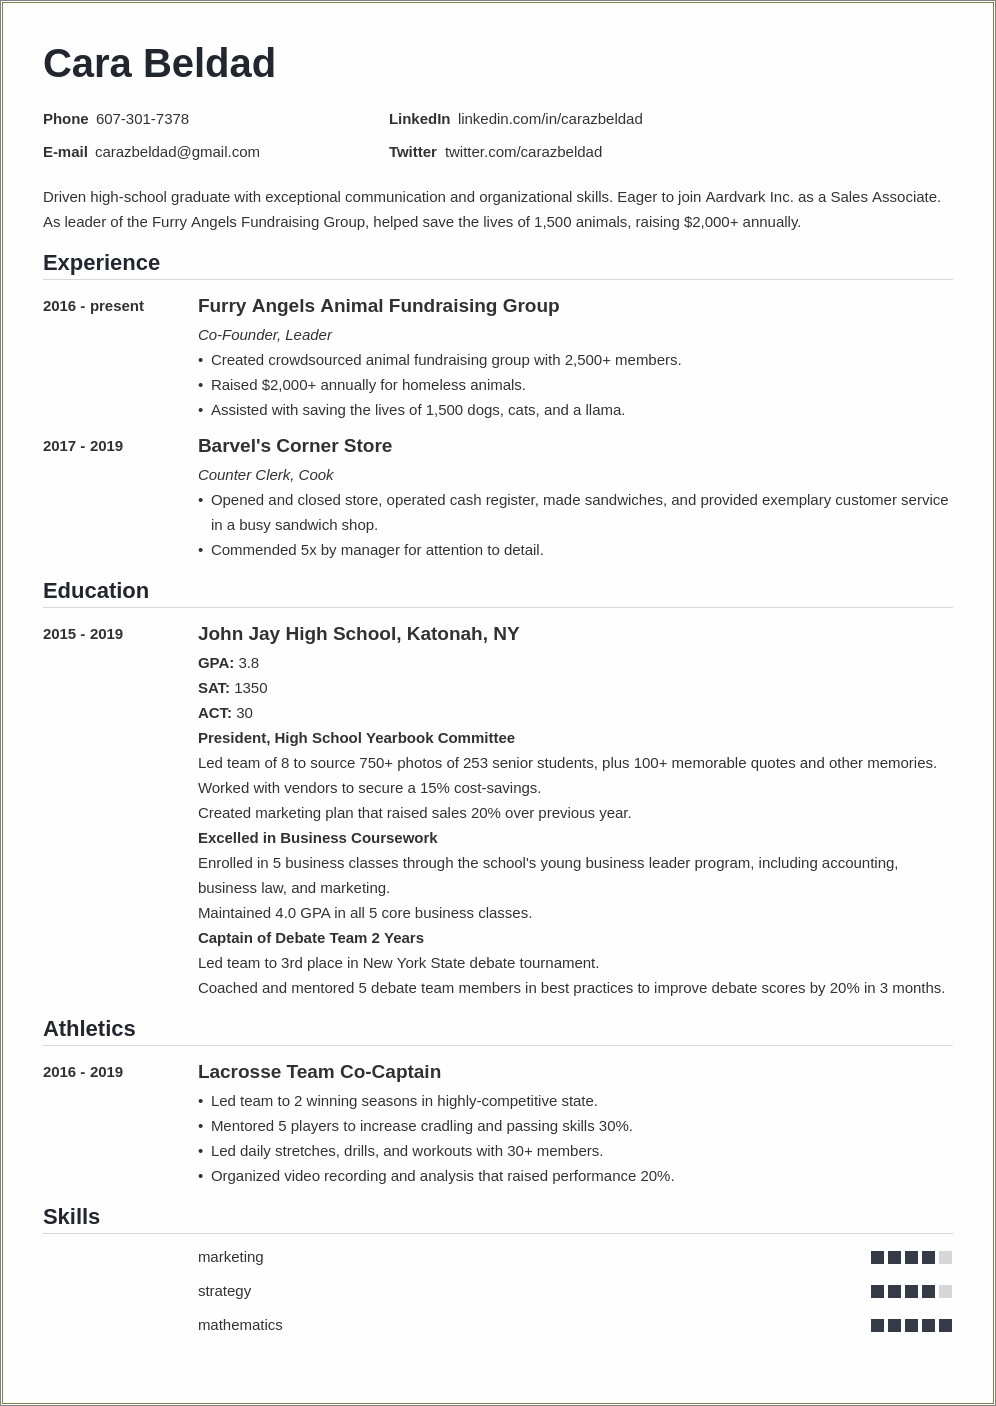 Resume Summary For International Student Advisor